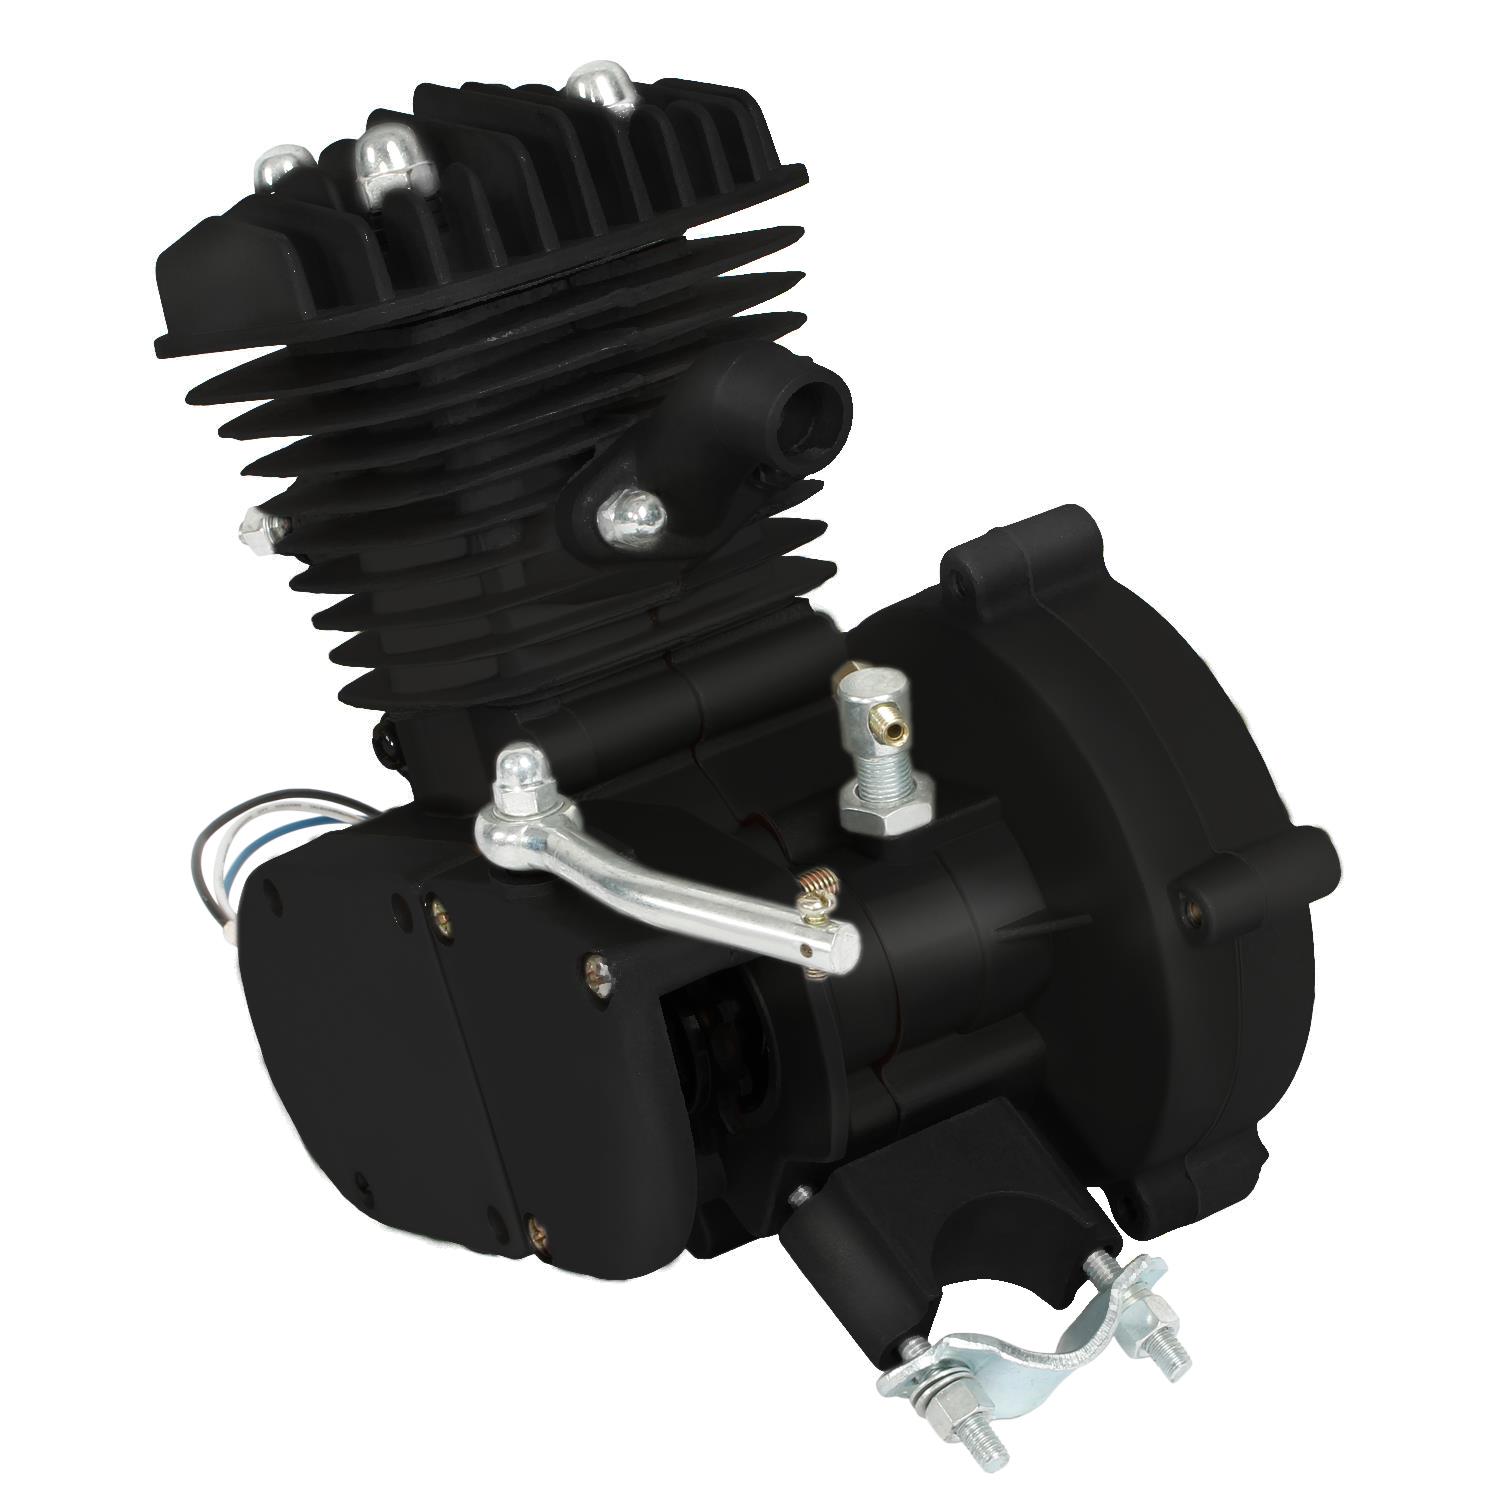 Ktaxon 80cc Powerful 2-Stroke Bicycle Motor Engine Gas Kit, Black - image 5 of 6